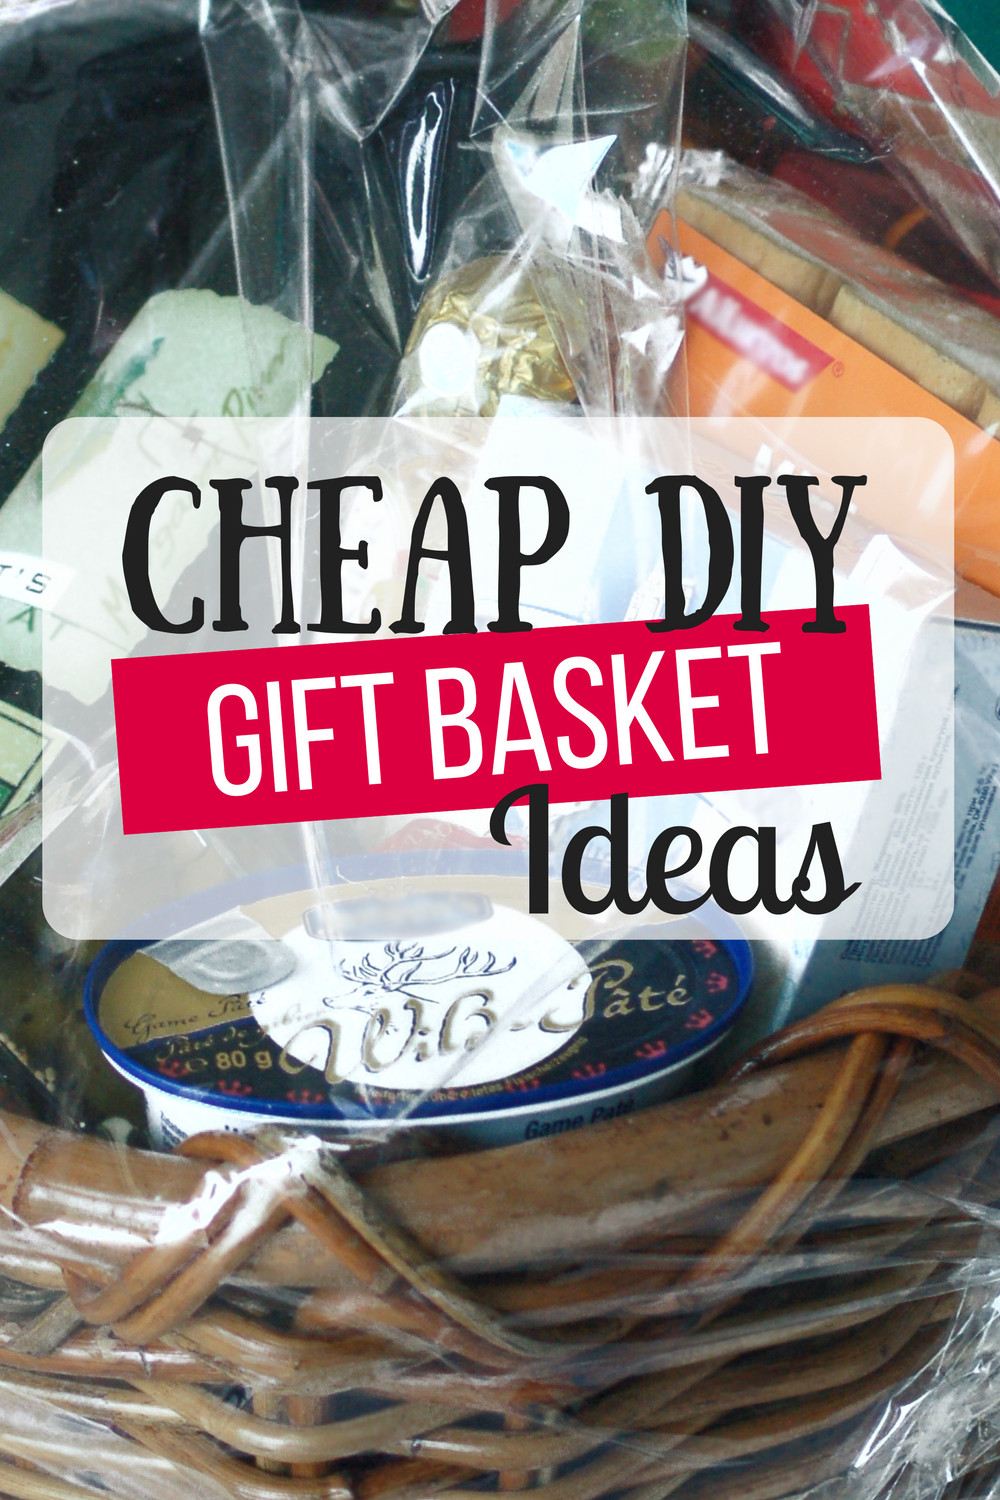 Diy Gift Basket Theme Ideas
 Cheap DIY Gift Baskets The Busy Bud er